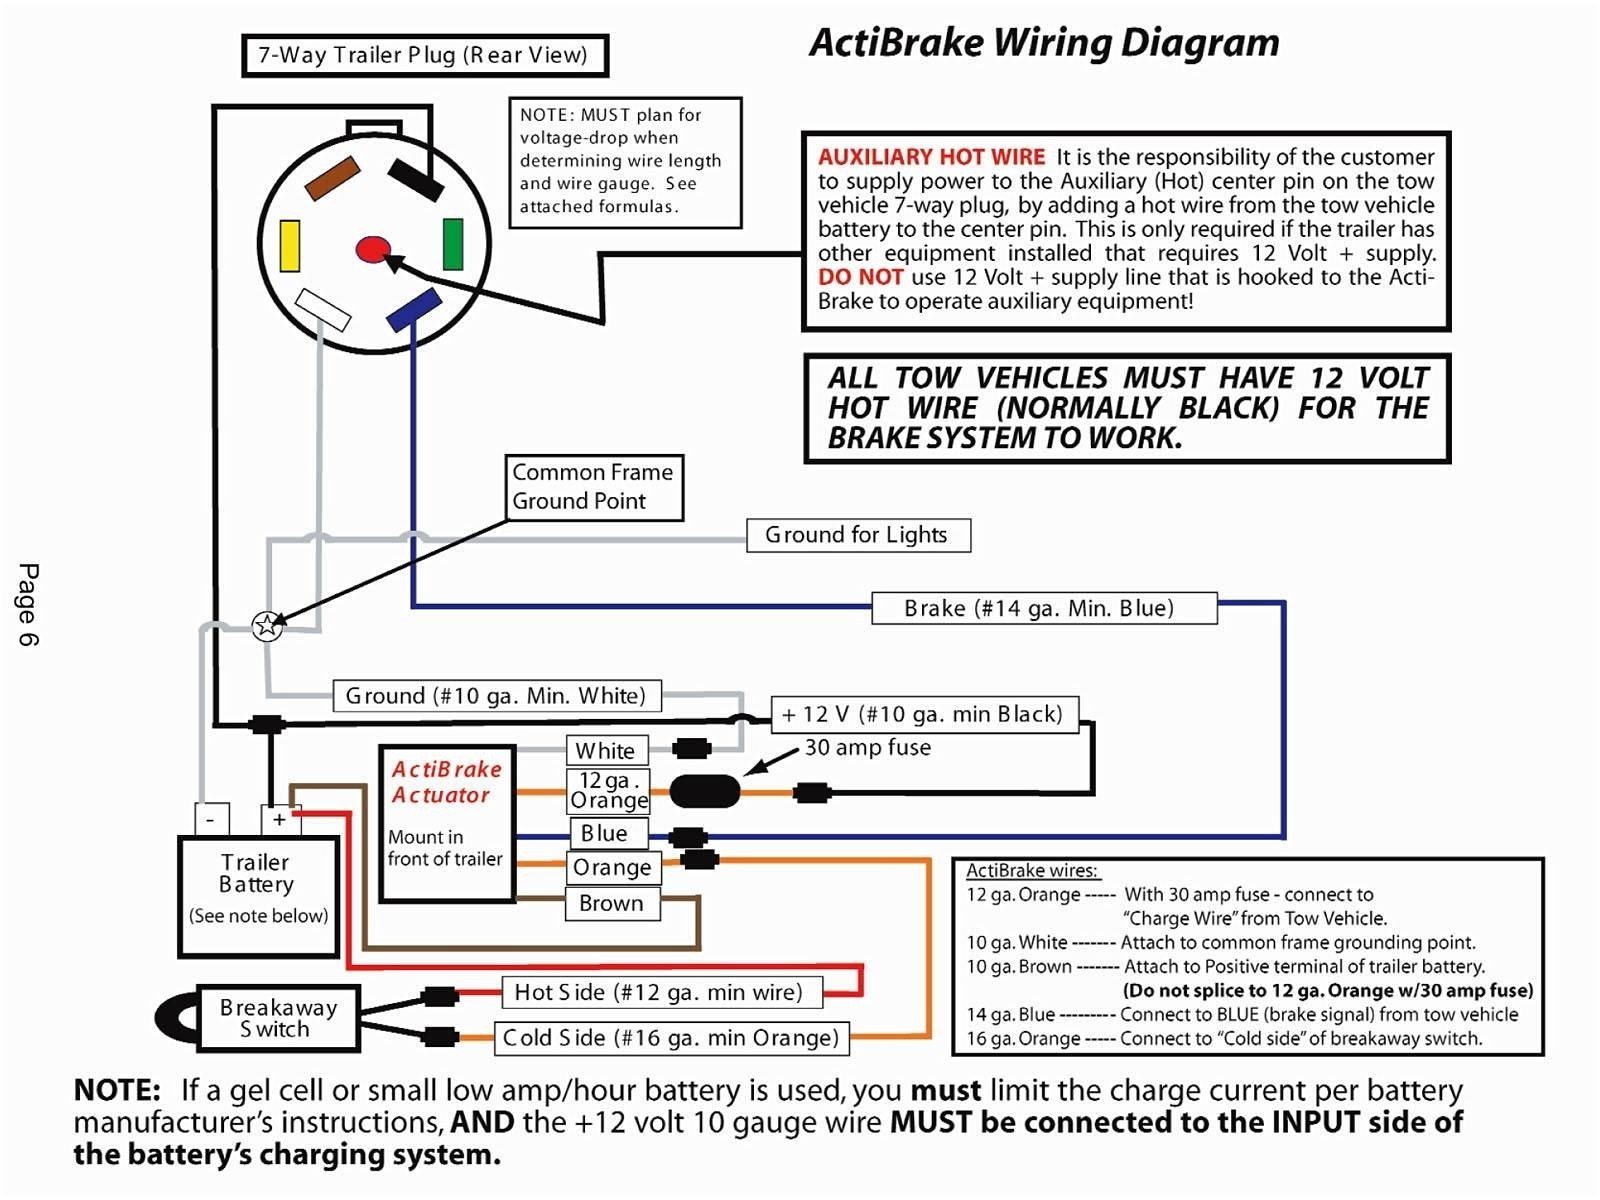 Trailer Wiring Diagram with Breakaway Switch Wiring Diagram Trailer Brakes Save Reese Trailer Wiring Diagram